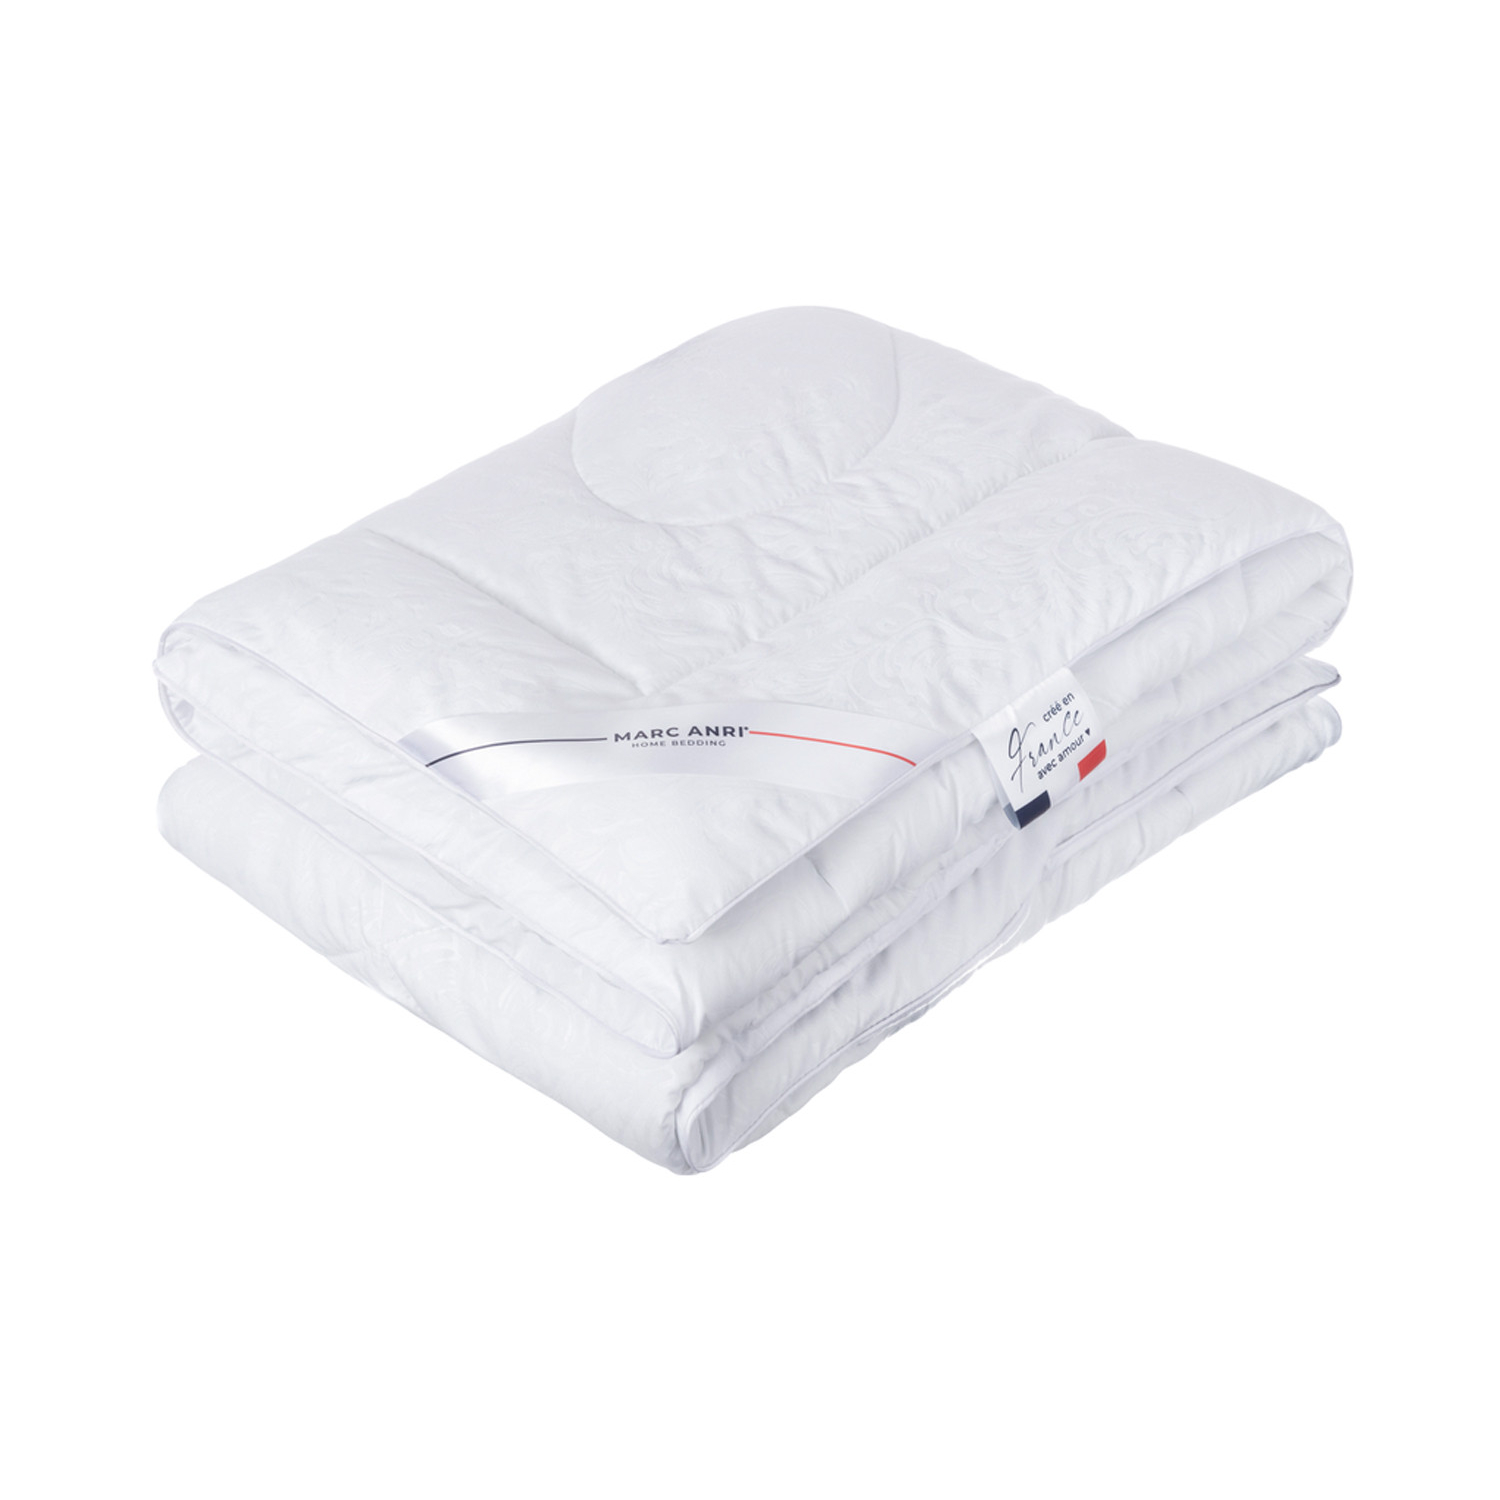 Одеяло Marc Anri Chinon белое 140х200 см (MA-MF) одеяло marc anri rouffach белое 140х200 см ma ec